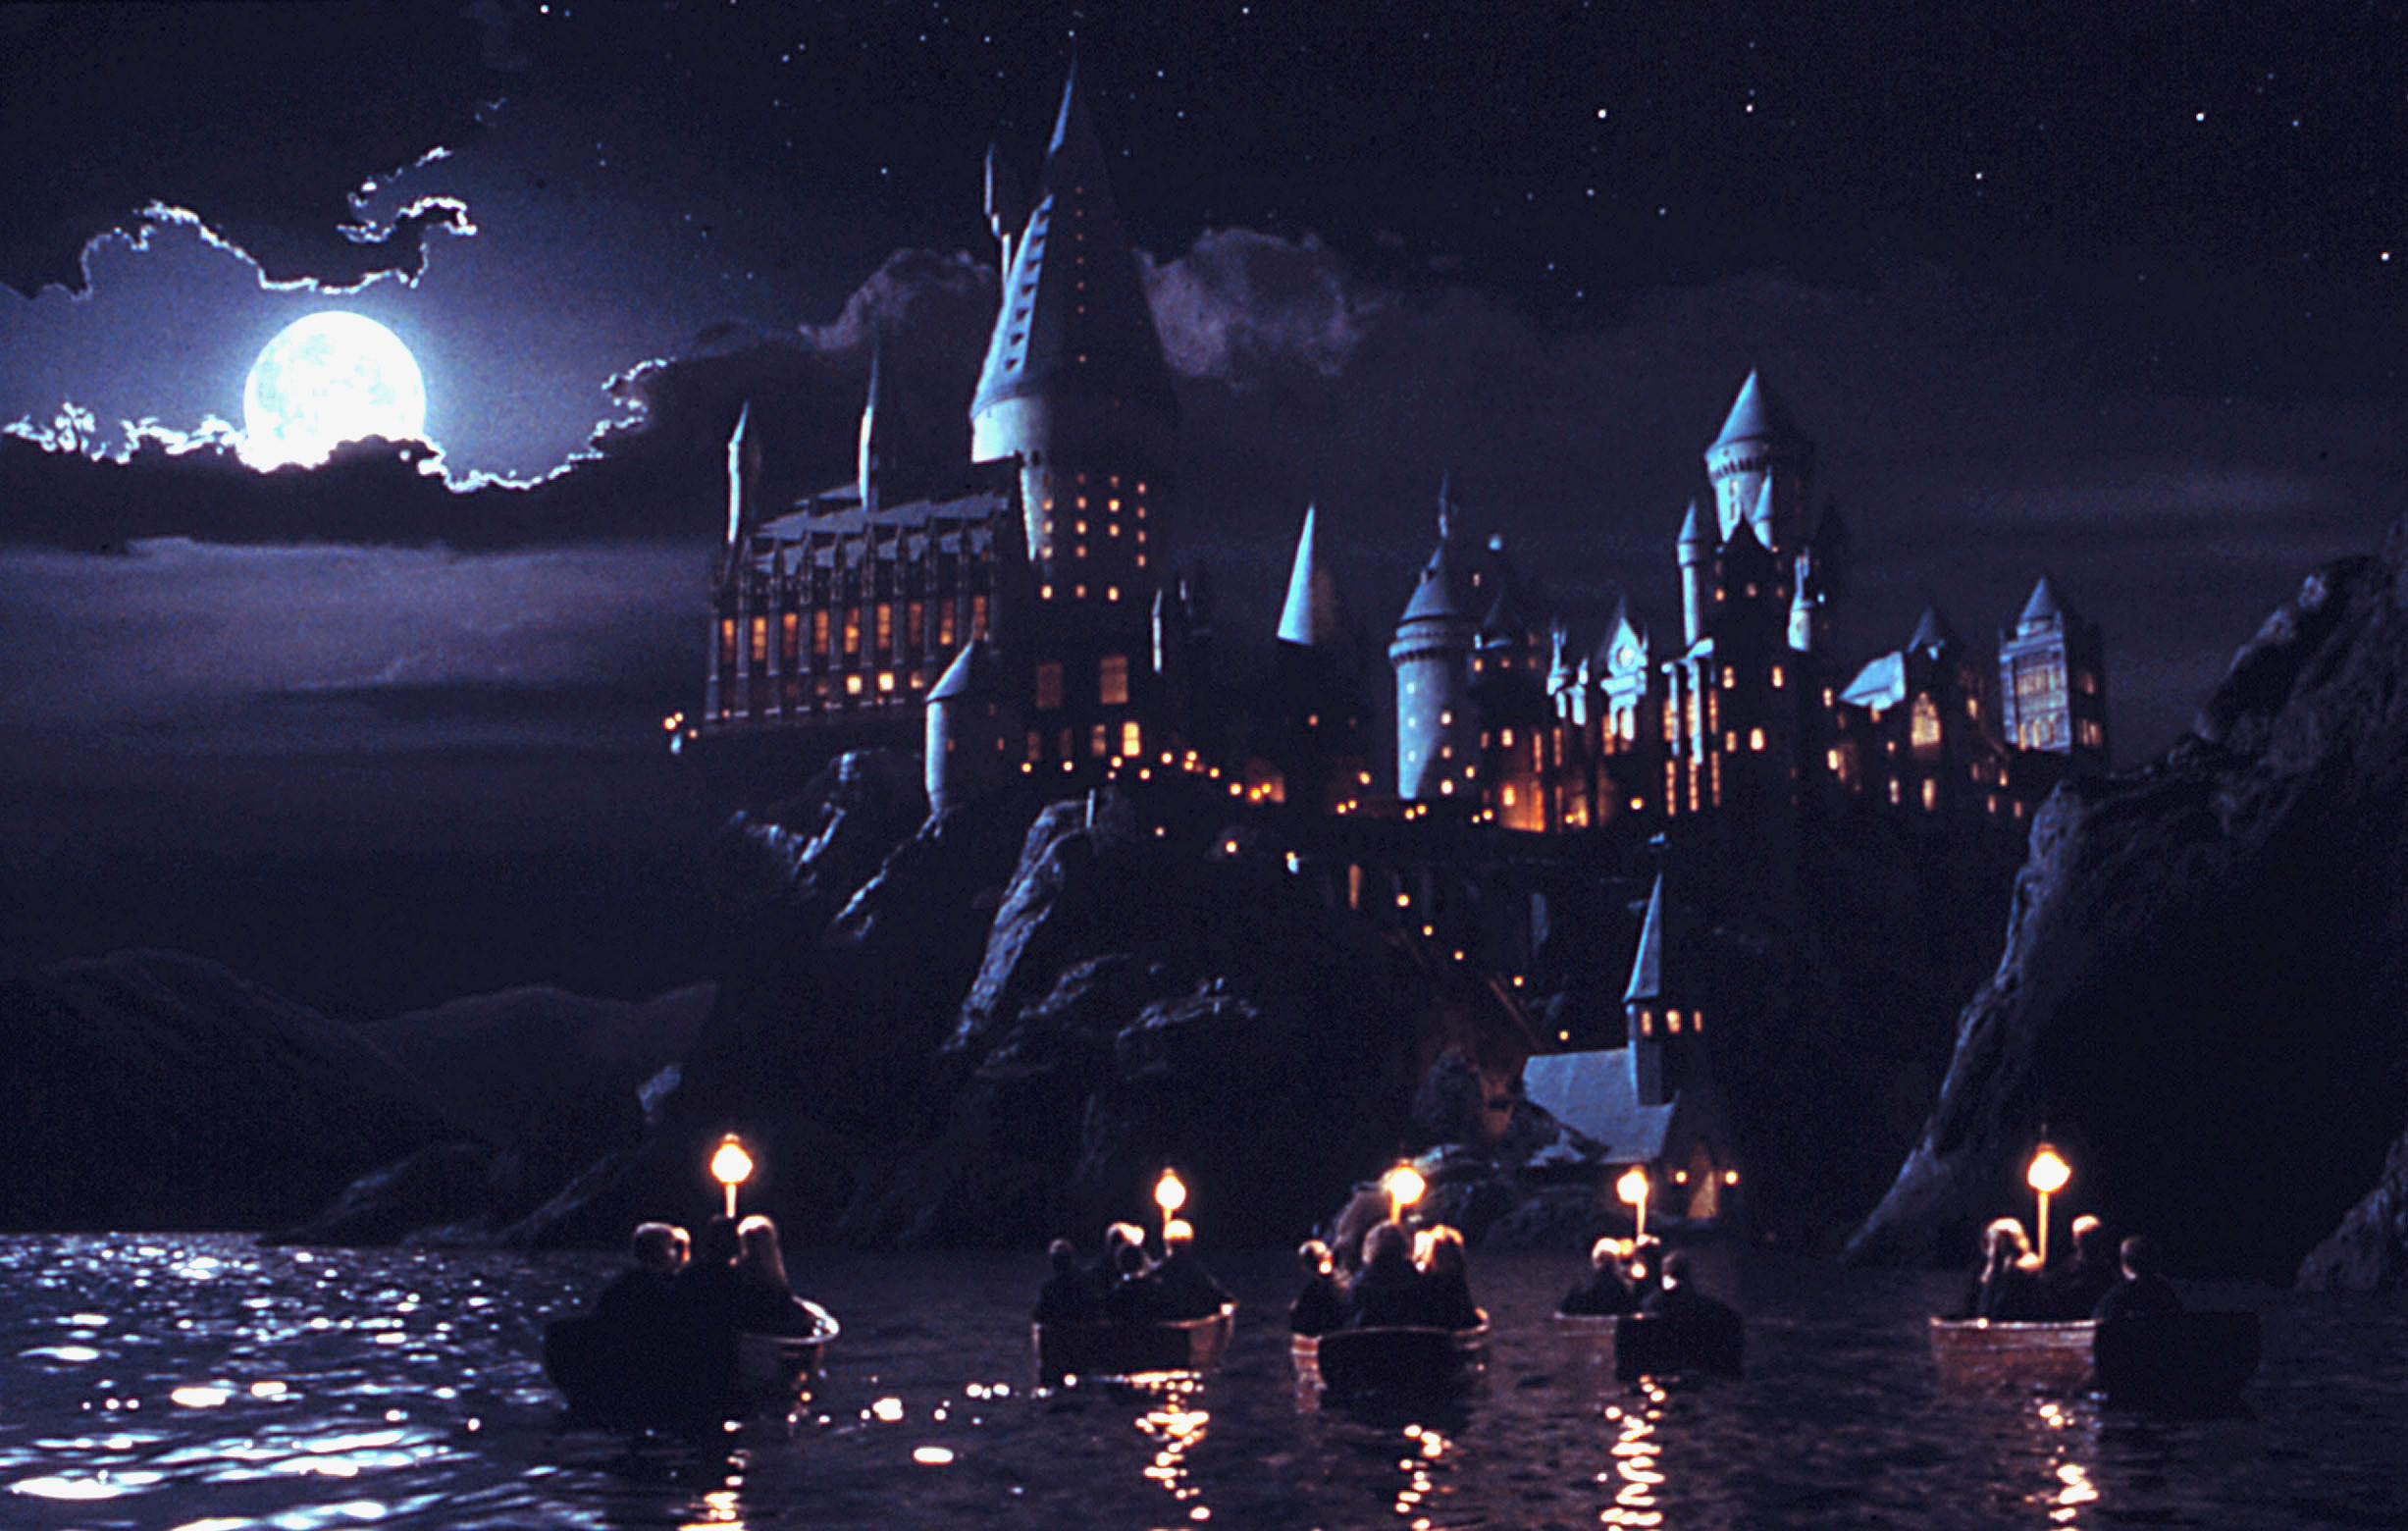 Hogwarts castle at night